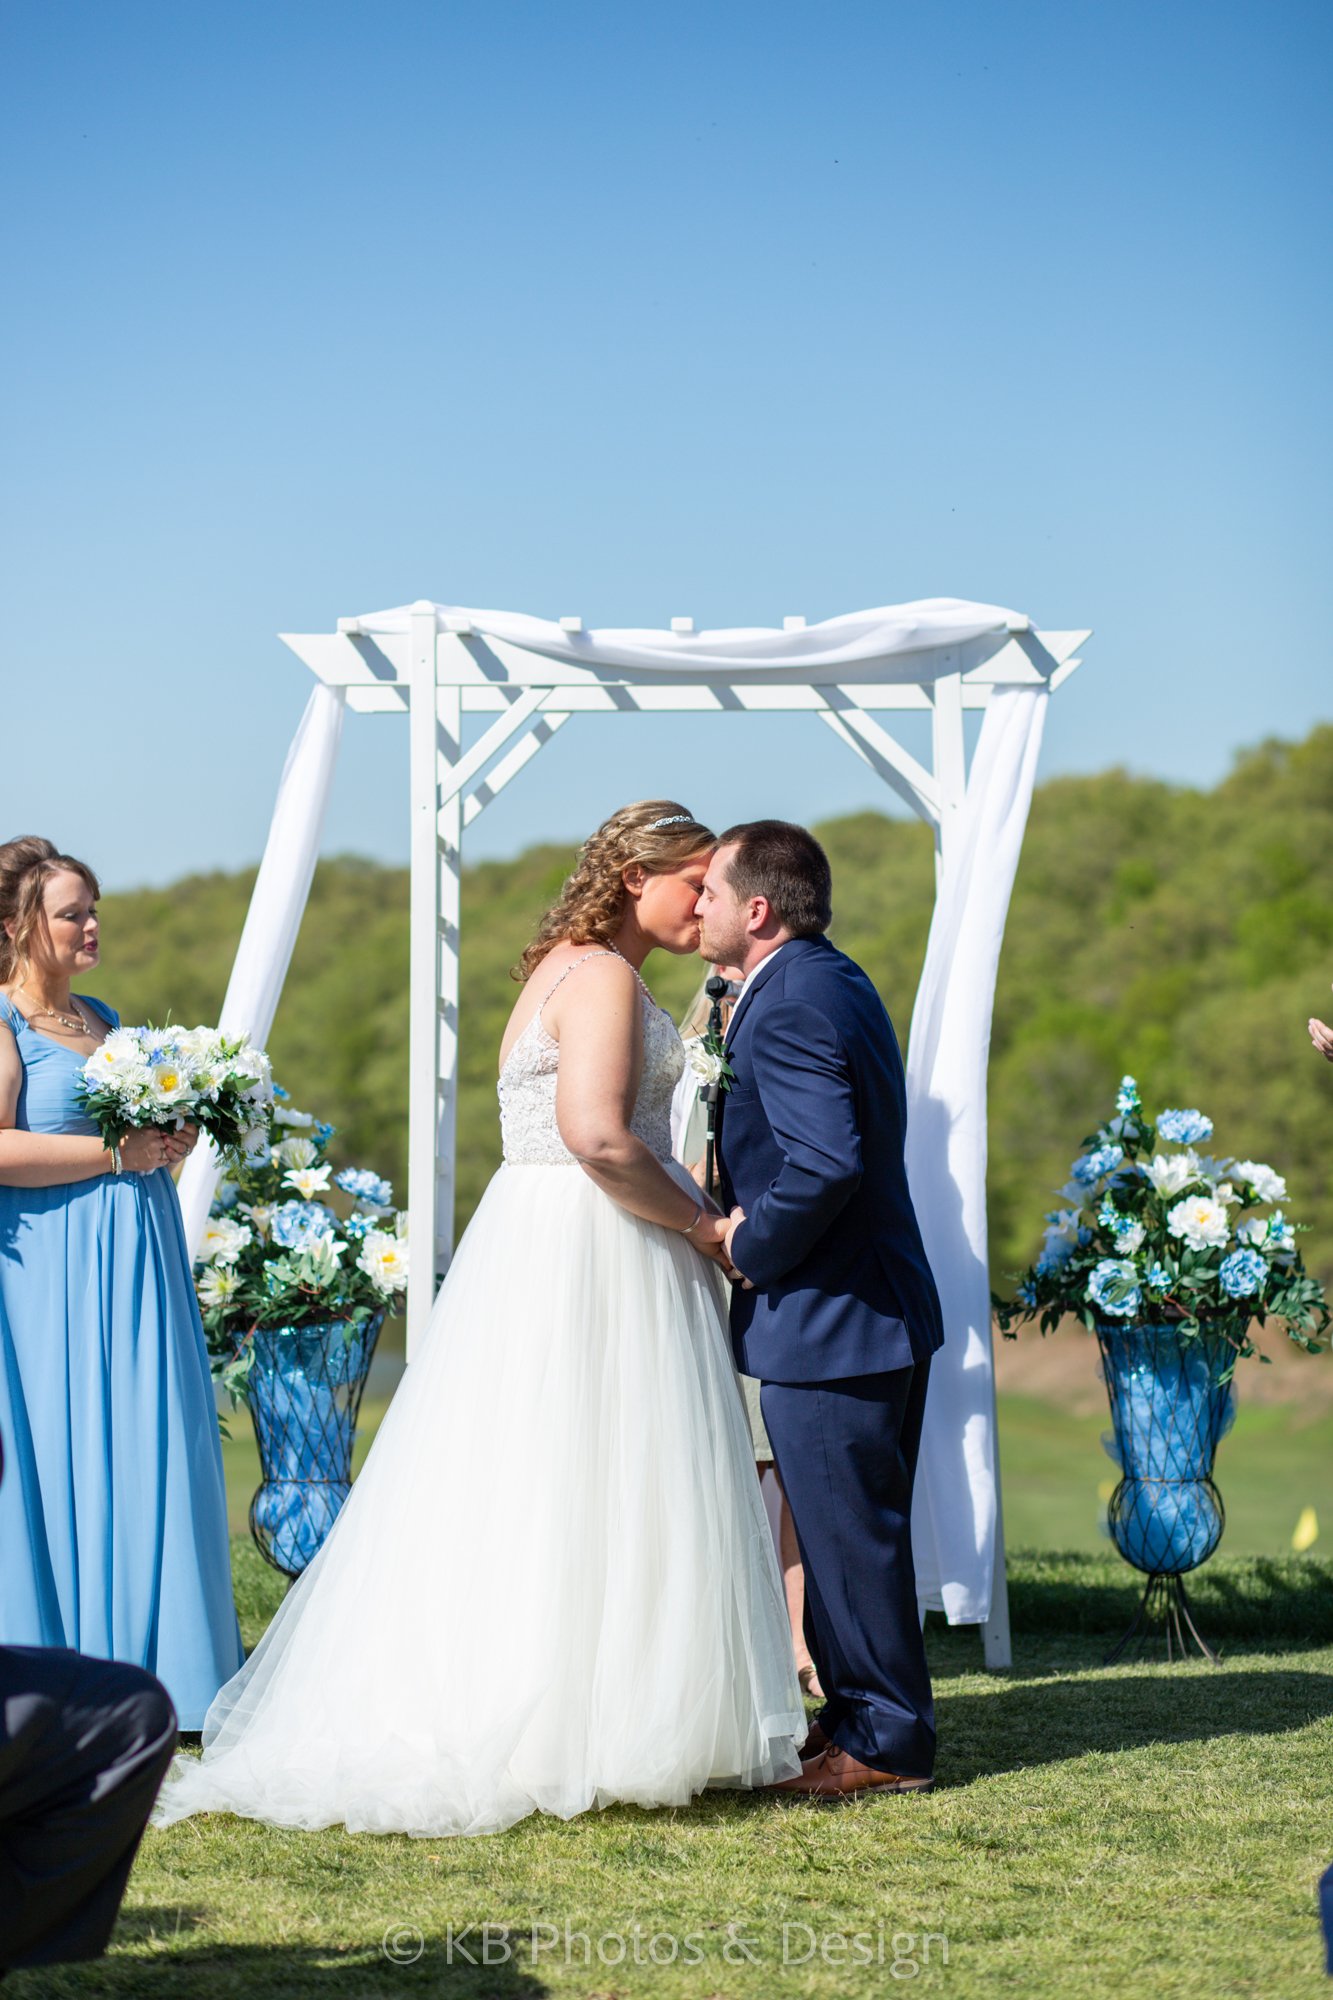 Josh-Michelle-Wedding-Lake-of-the-Ozarks-Jefferson-City-Missouri-Margaritaville-Lake-Resort-wedding-photographer-KB-Photos-and-Design-186.jpg